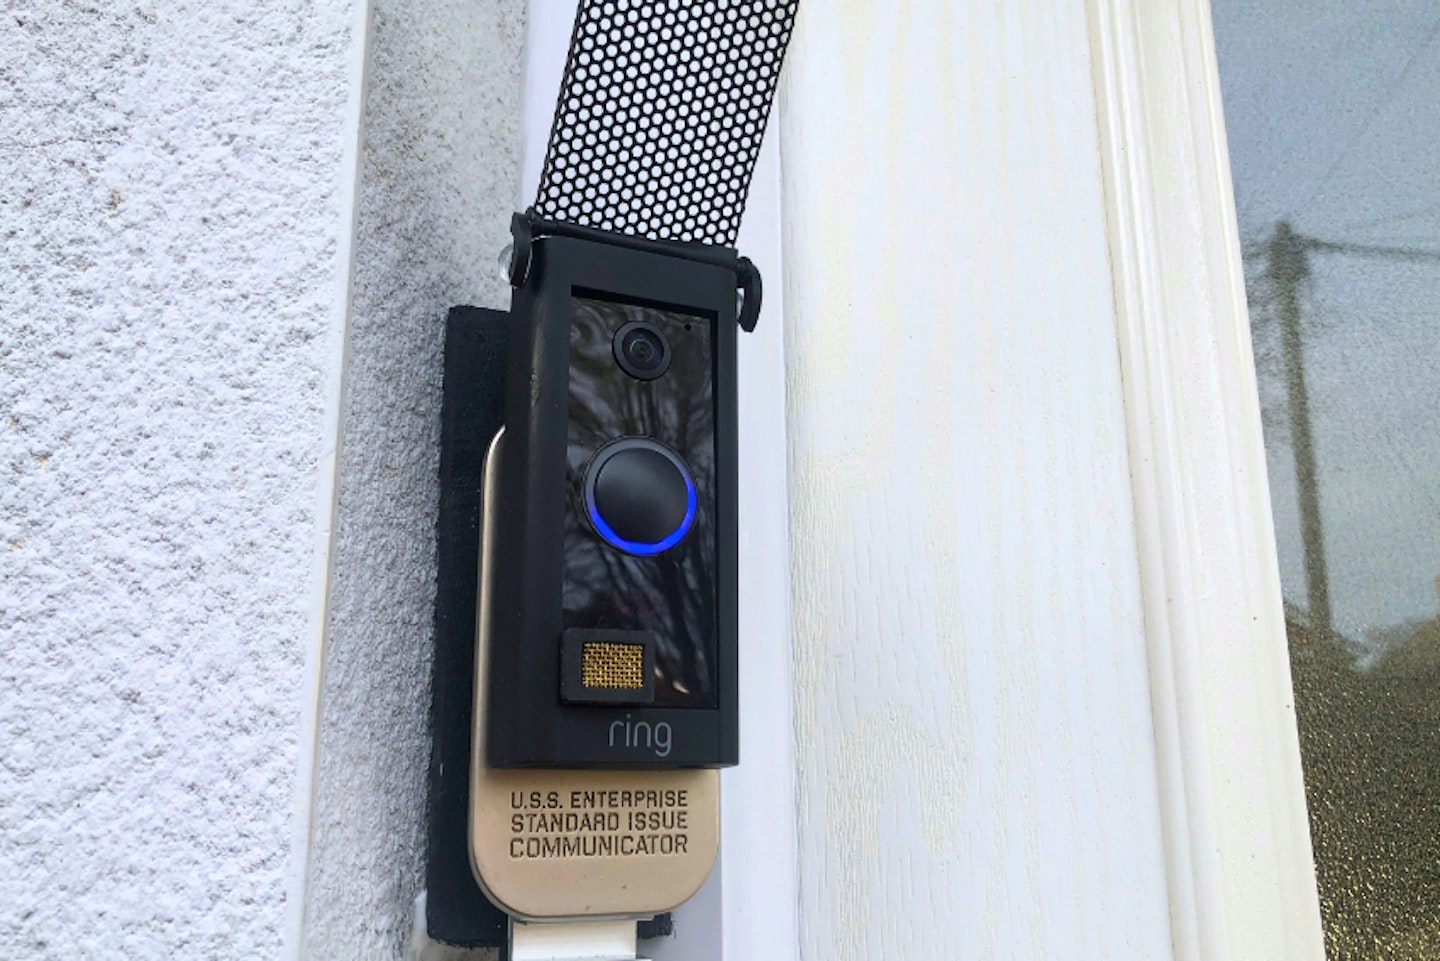 a ring video doorbell